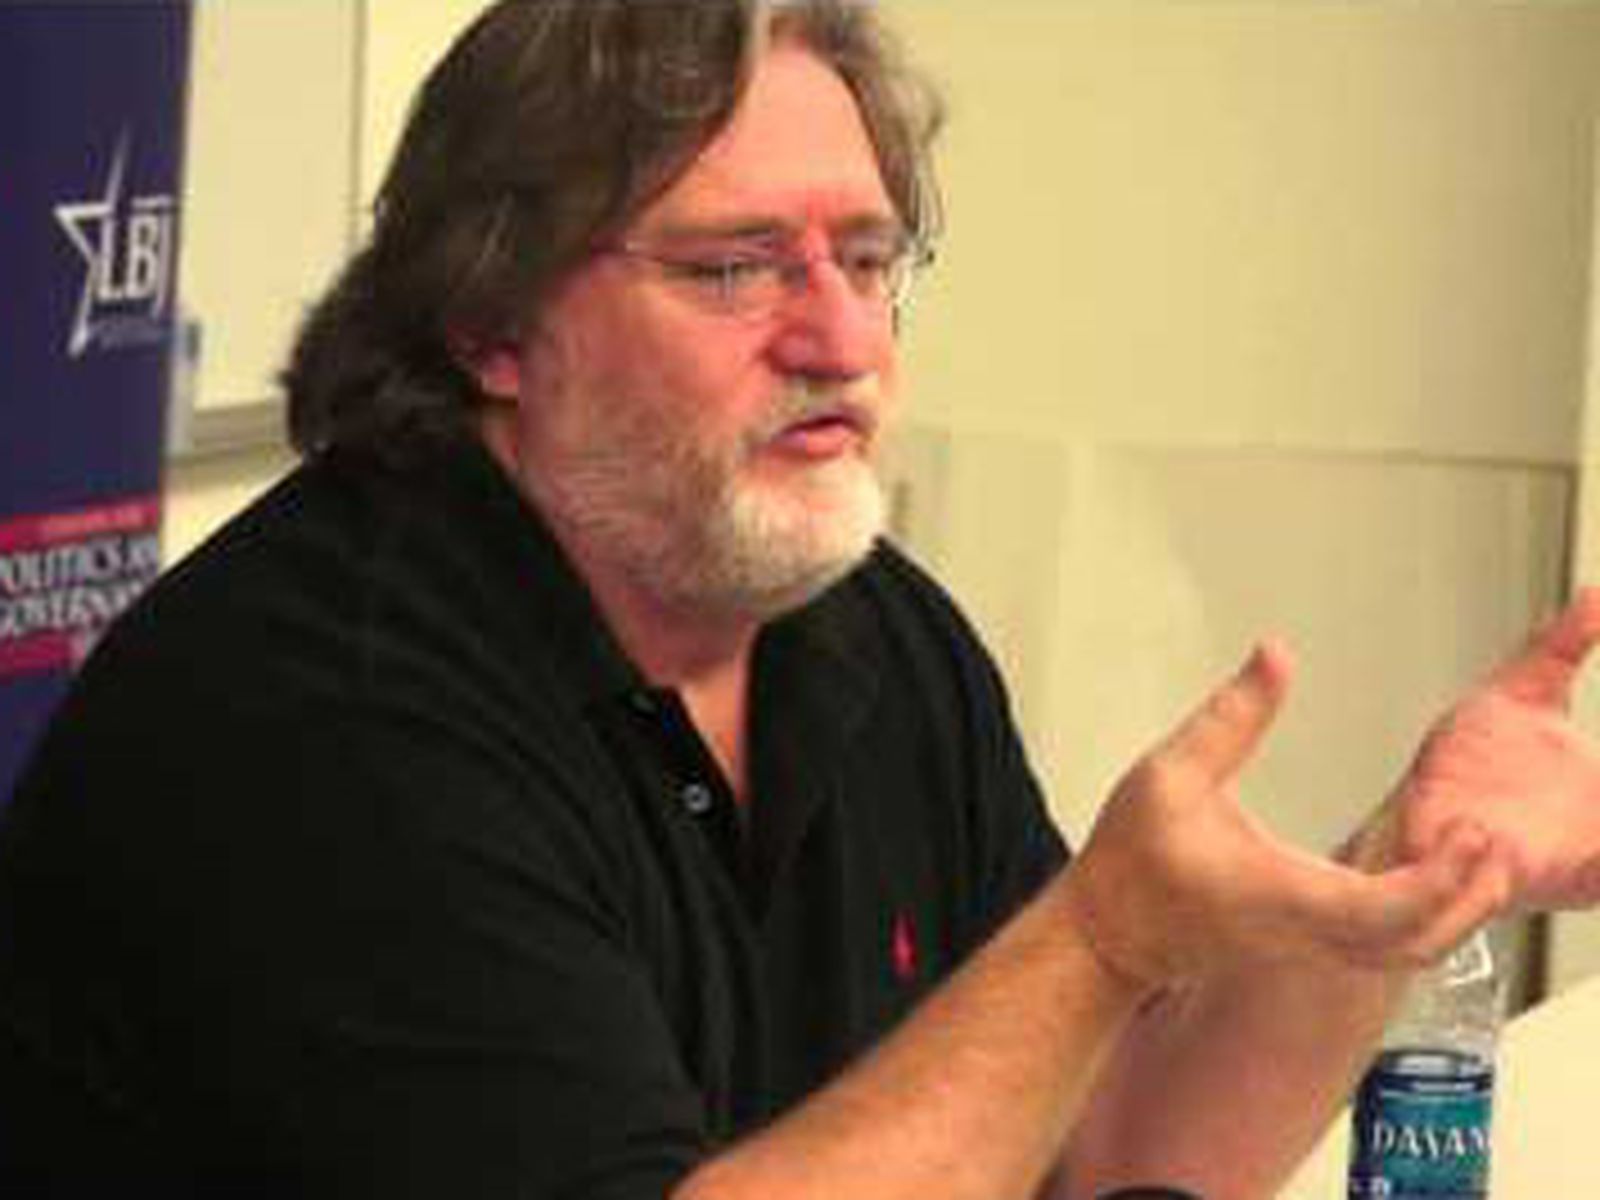 Why i picked him - Gabe Newell, My hero